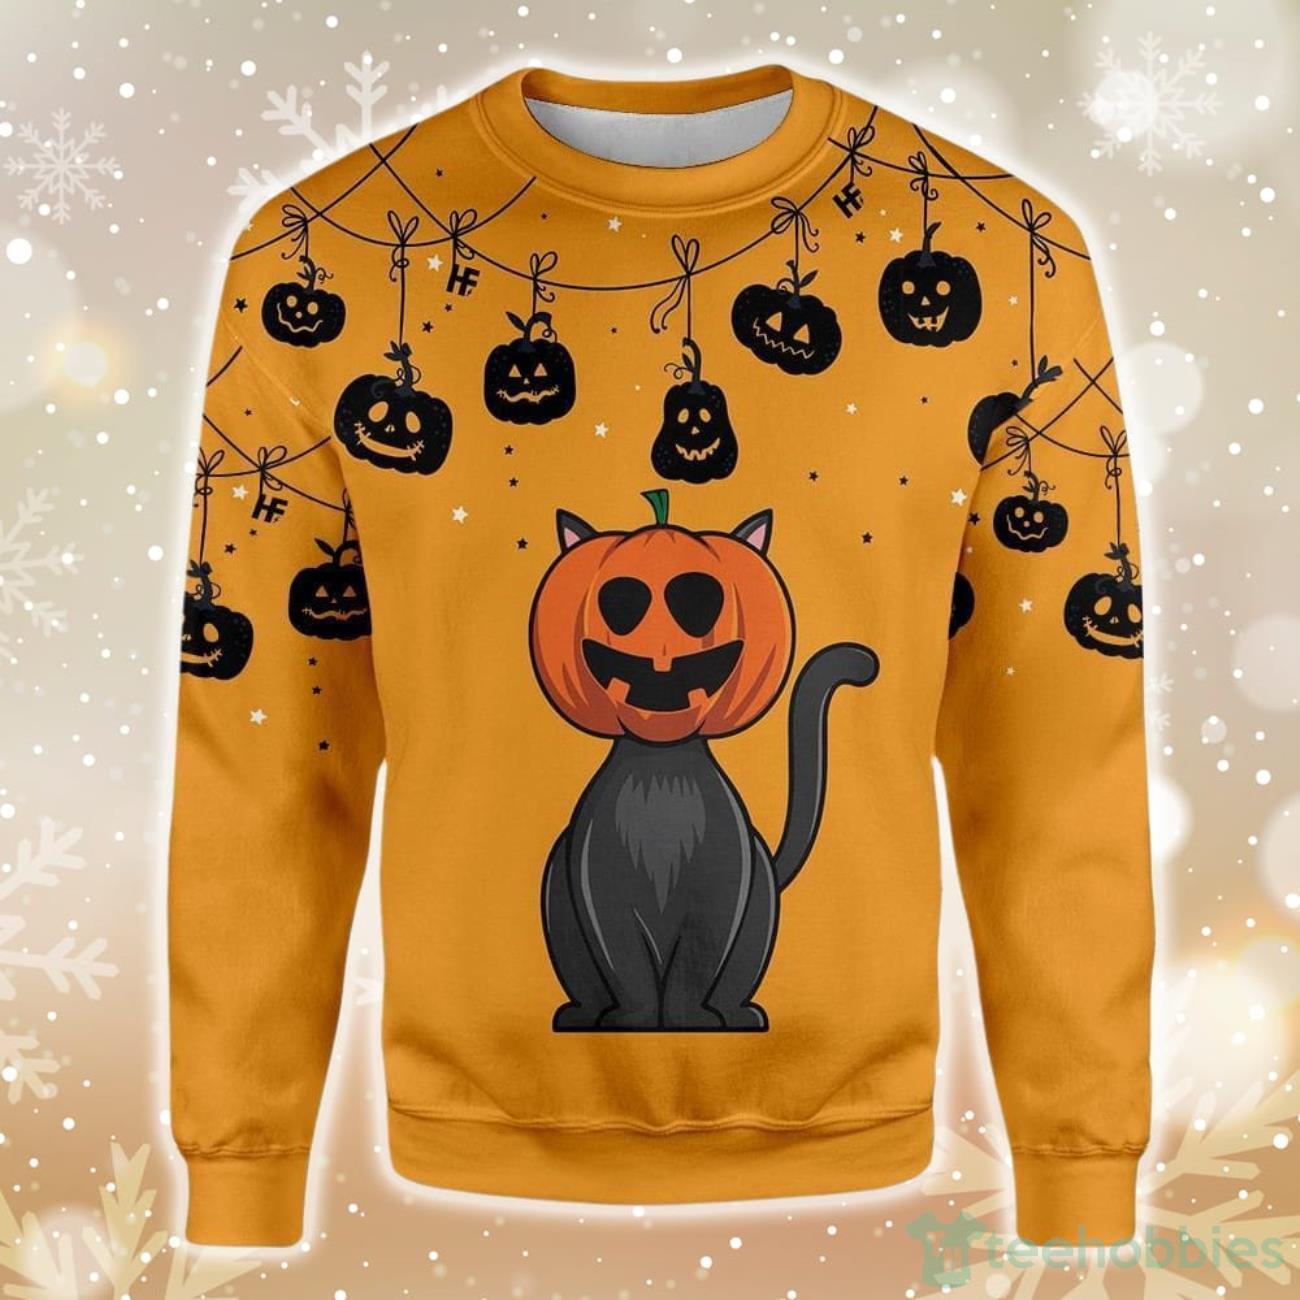 Cat Pumpkin Ugly Christmas Sweater - Cat Pumpkin EZ25 1010 All Over Print Sweatshirt_1